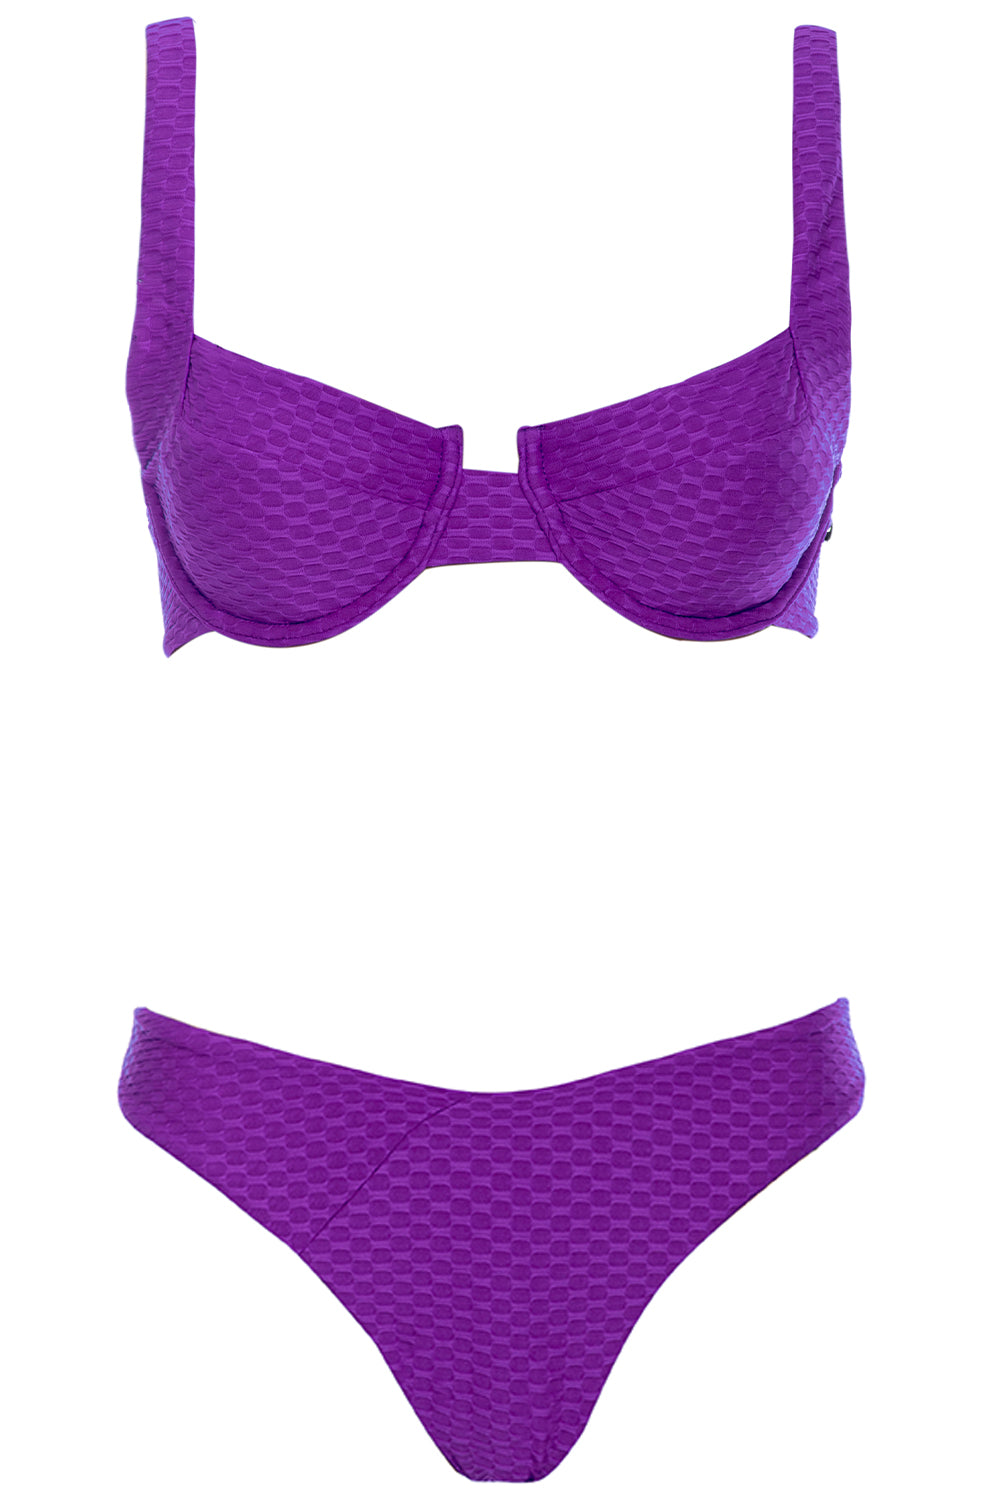 Laguna Bikini Purple Set on white background front view.